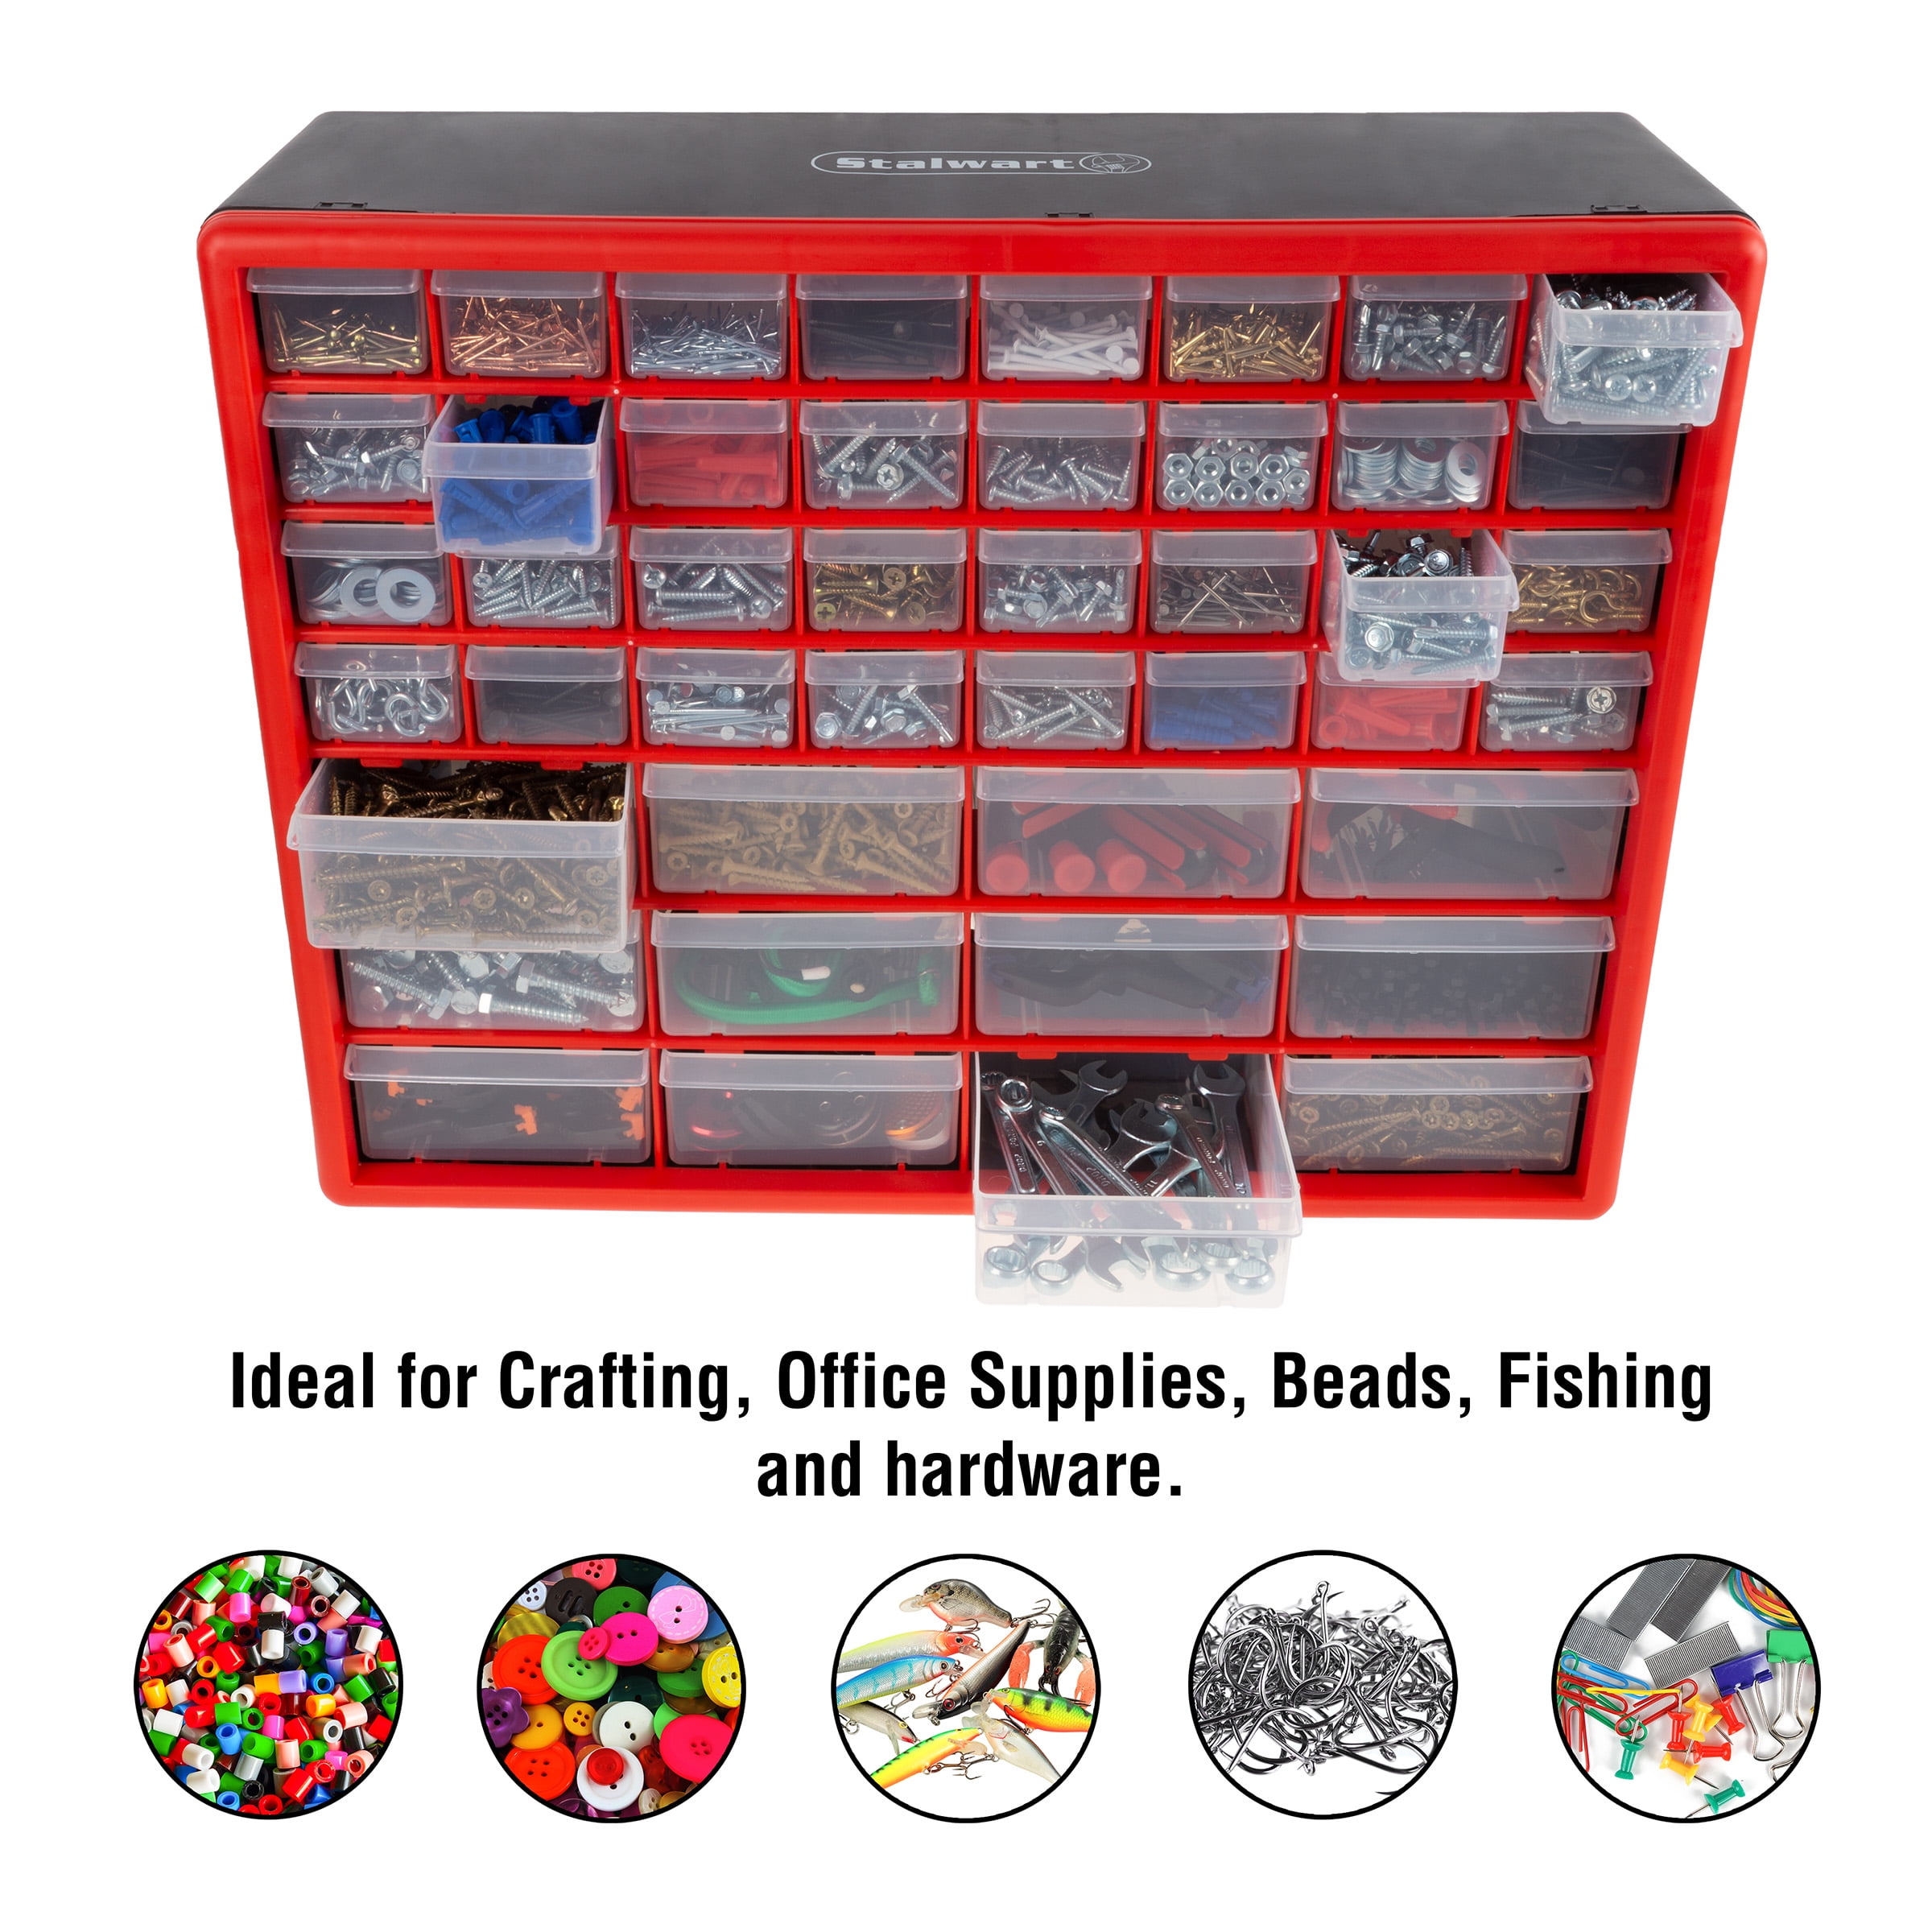 Shop / Garage Small Parts / Hardware Organizer - Storage Drawers -  Livermore, California, Facebook Marketplace